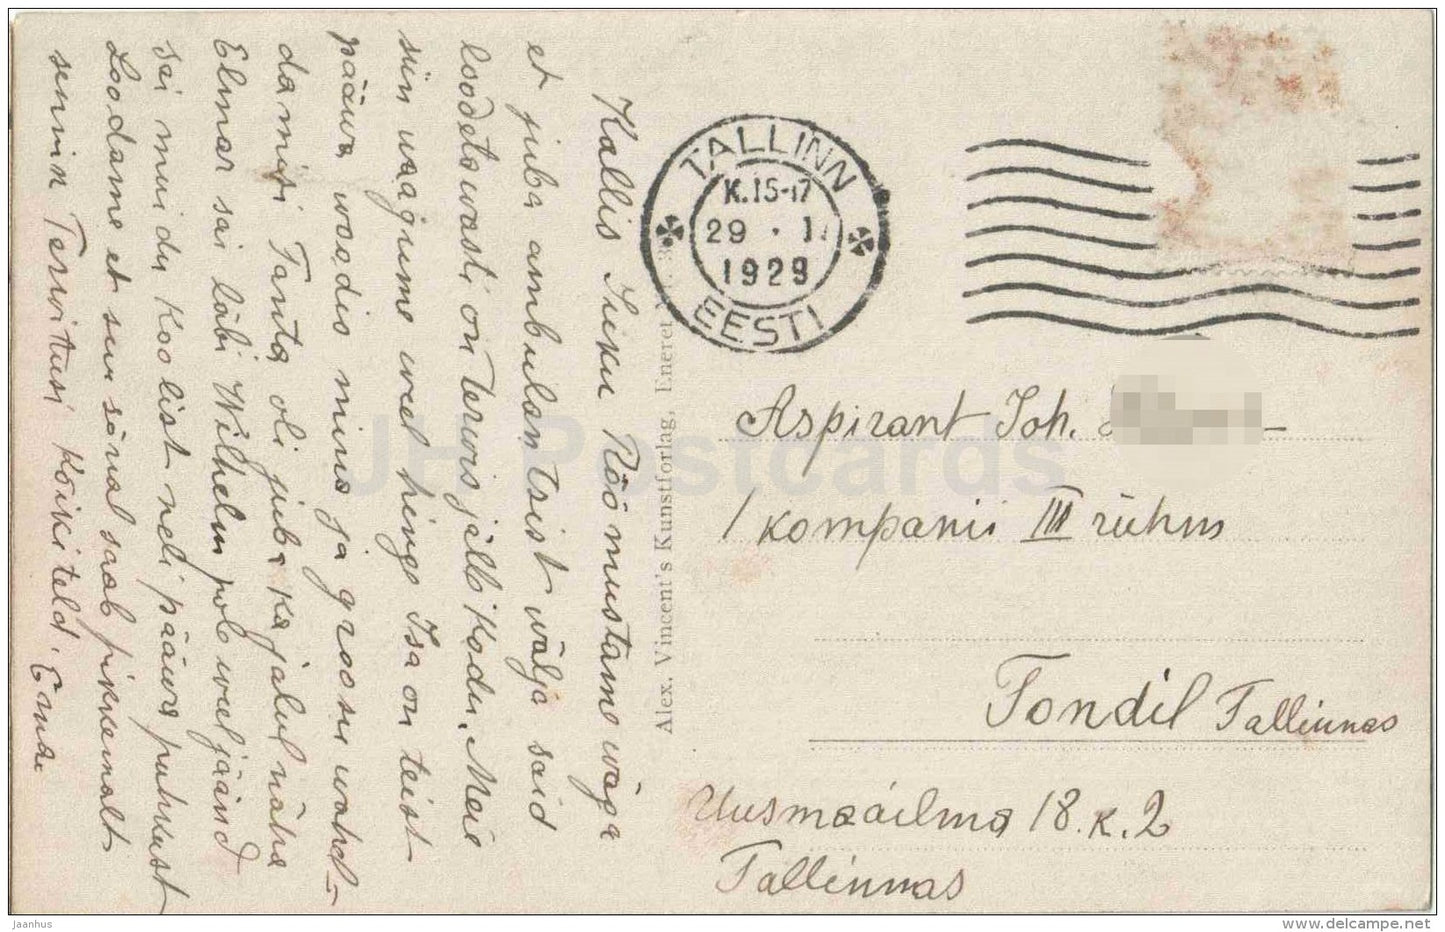 Langelinie - Sofartsmonumentet - Kobenhavn - Copenhagen - Denmark - 302 - sent to Estonia 1929 - JH Postcards